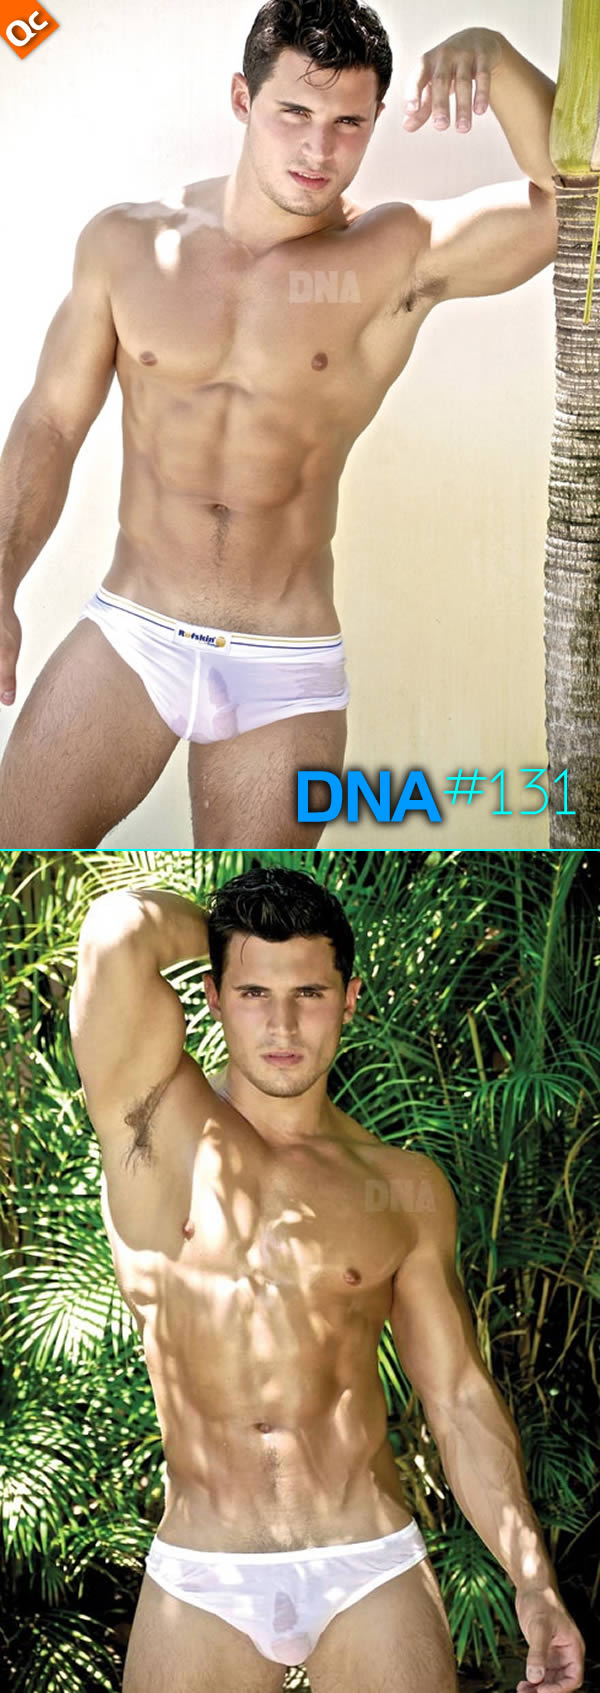 DNA #131 (3)